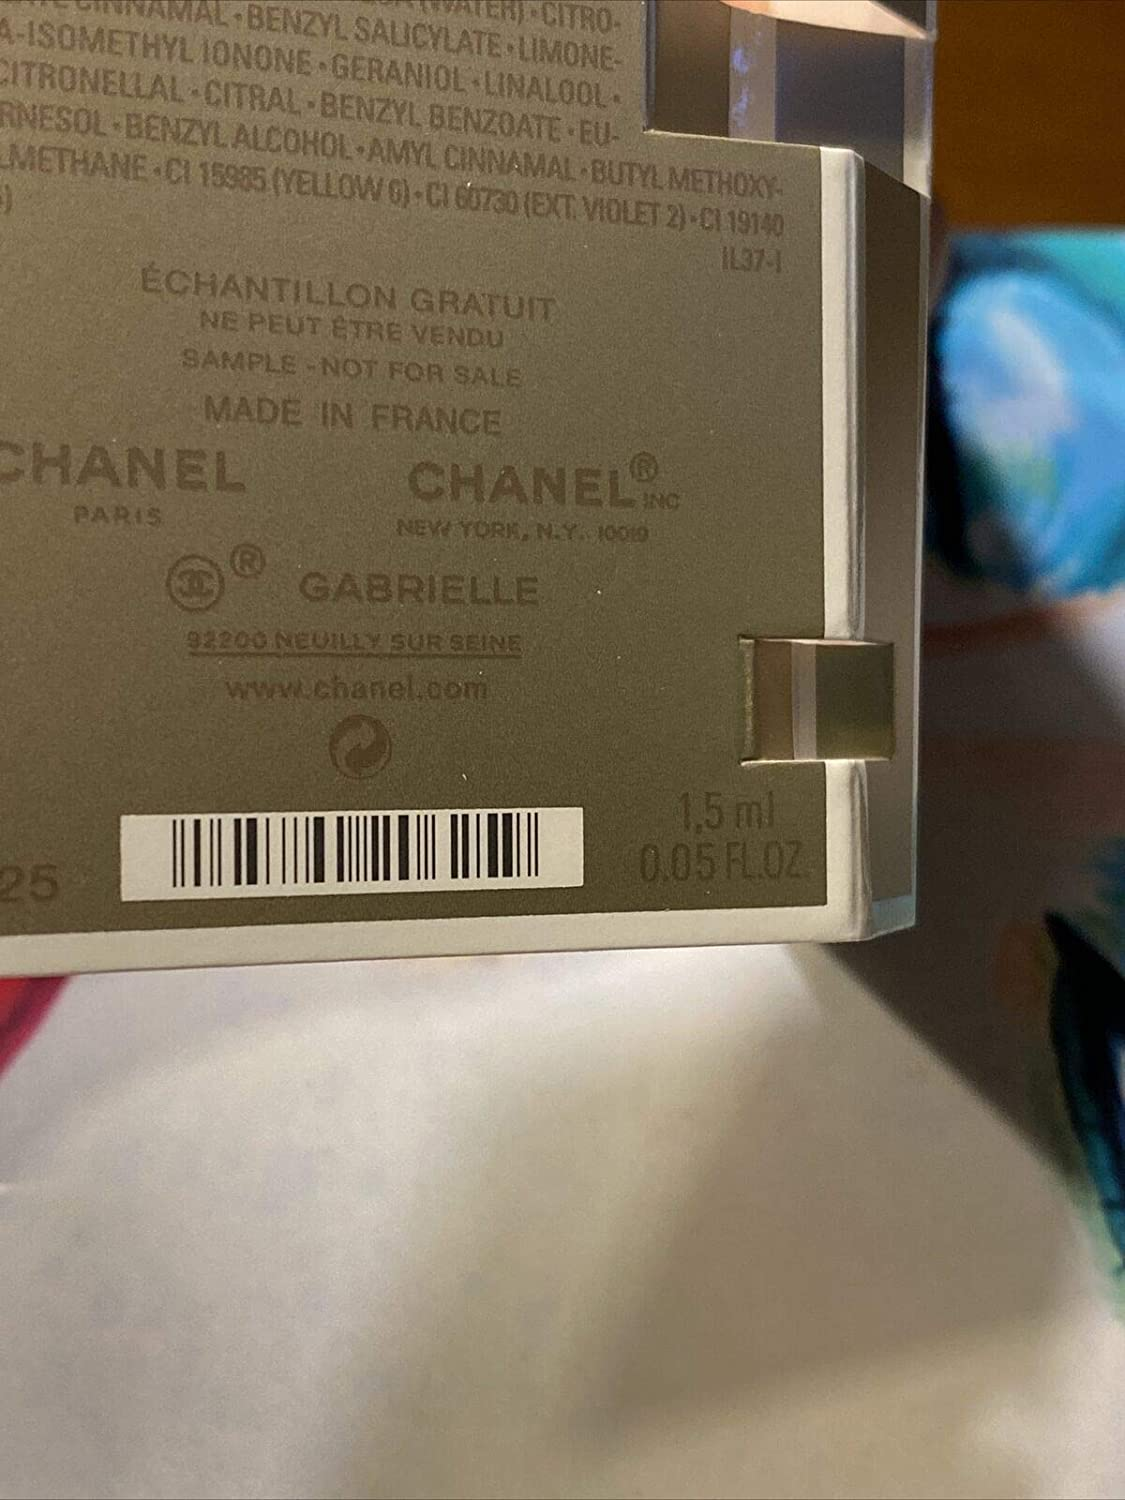 CHANEL Gabrielle Essence Eau De Parfum Perfume 0.05 Oz / 1.5 Ml Sample Spray